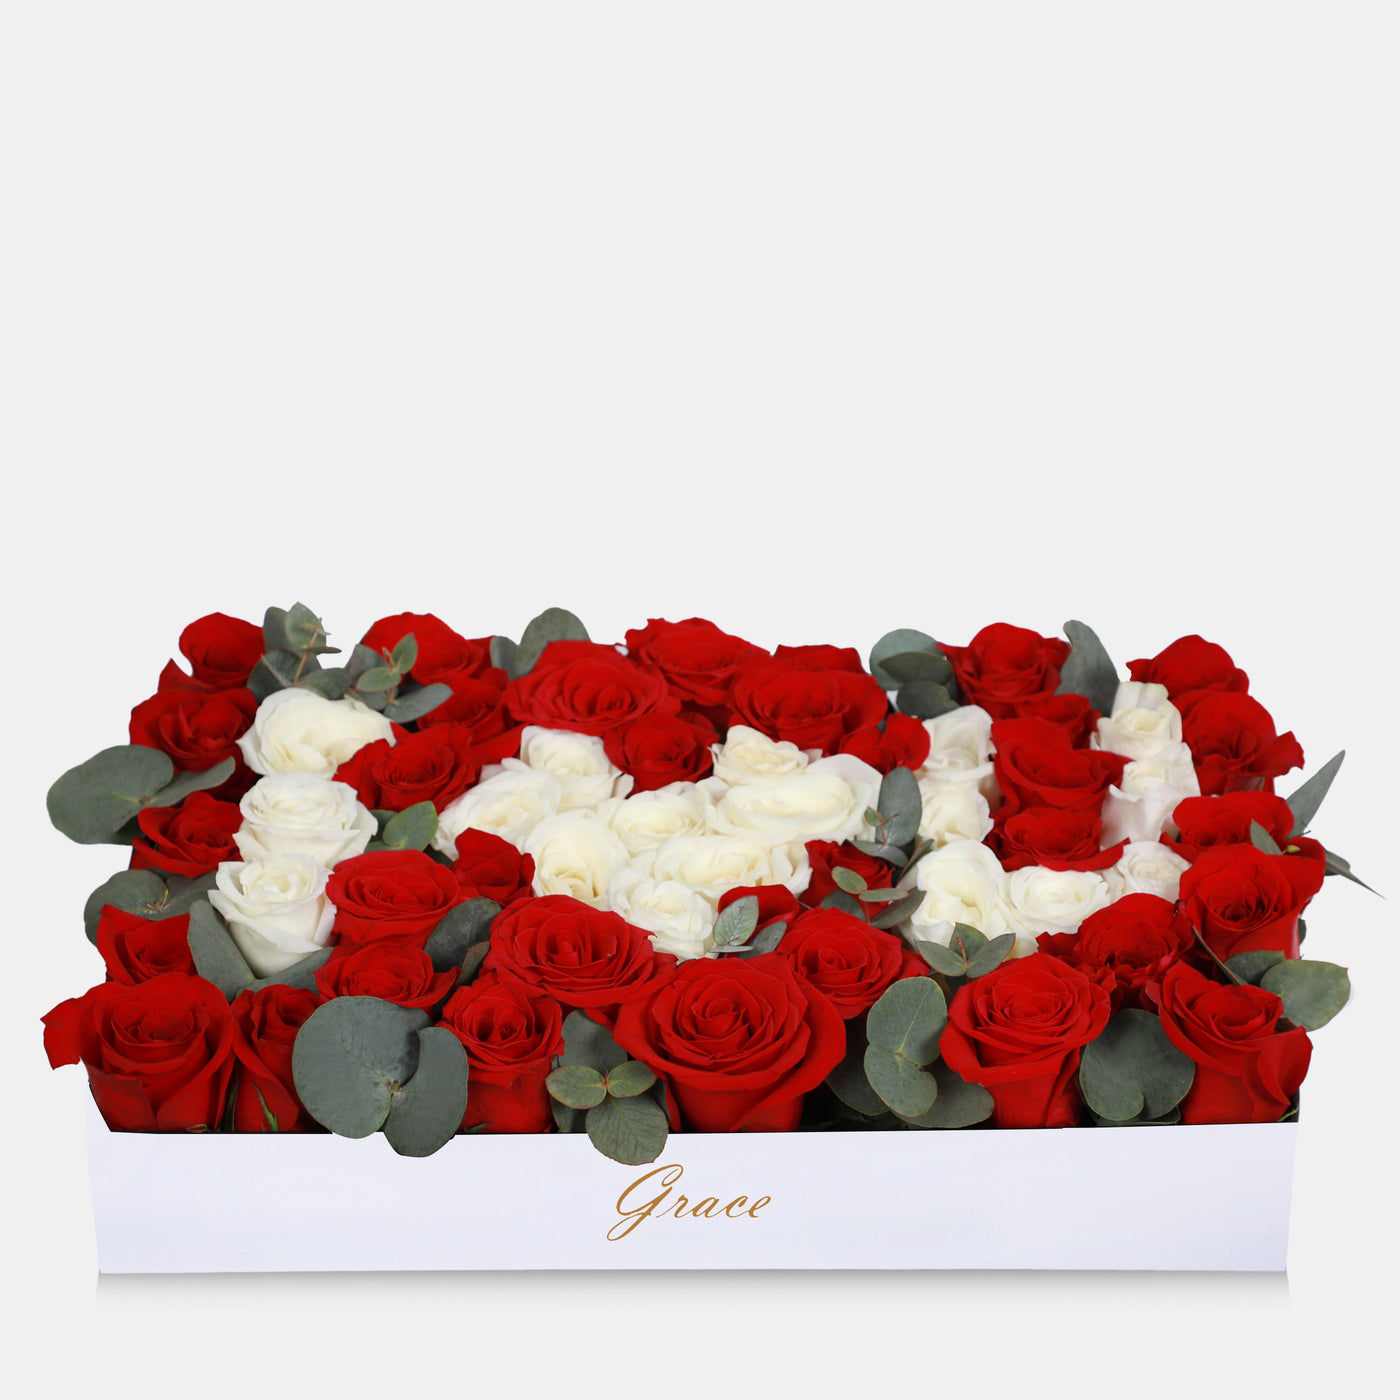 I Love You - Fresh flowers